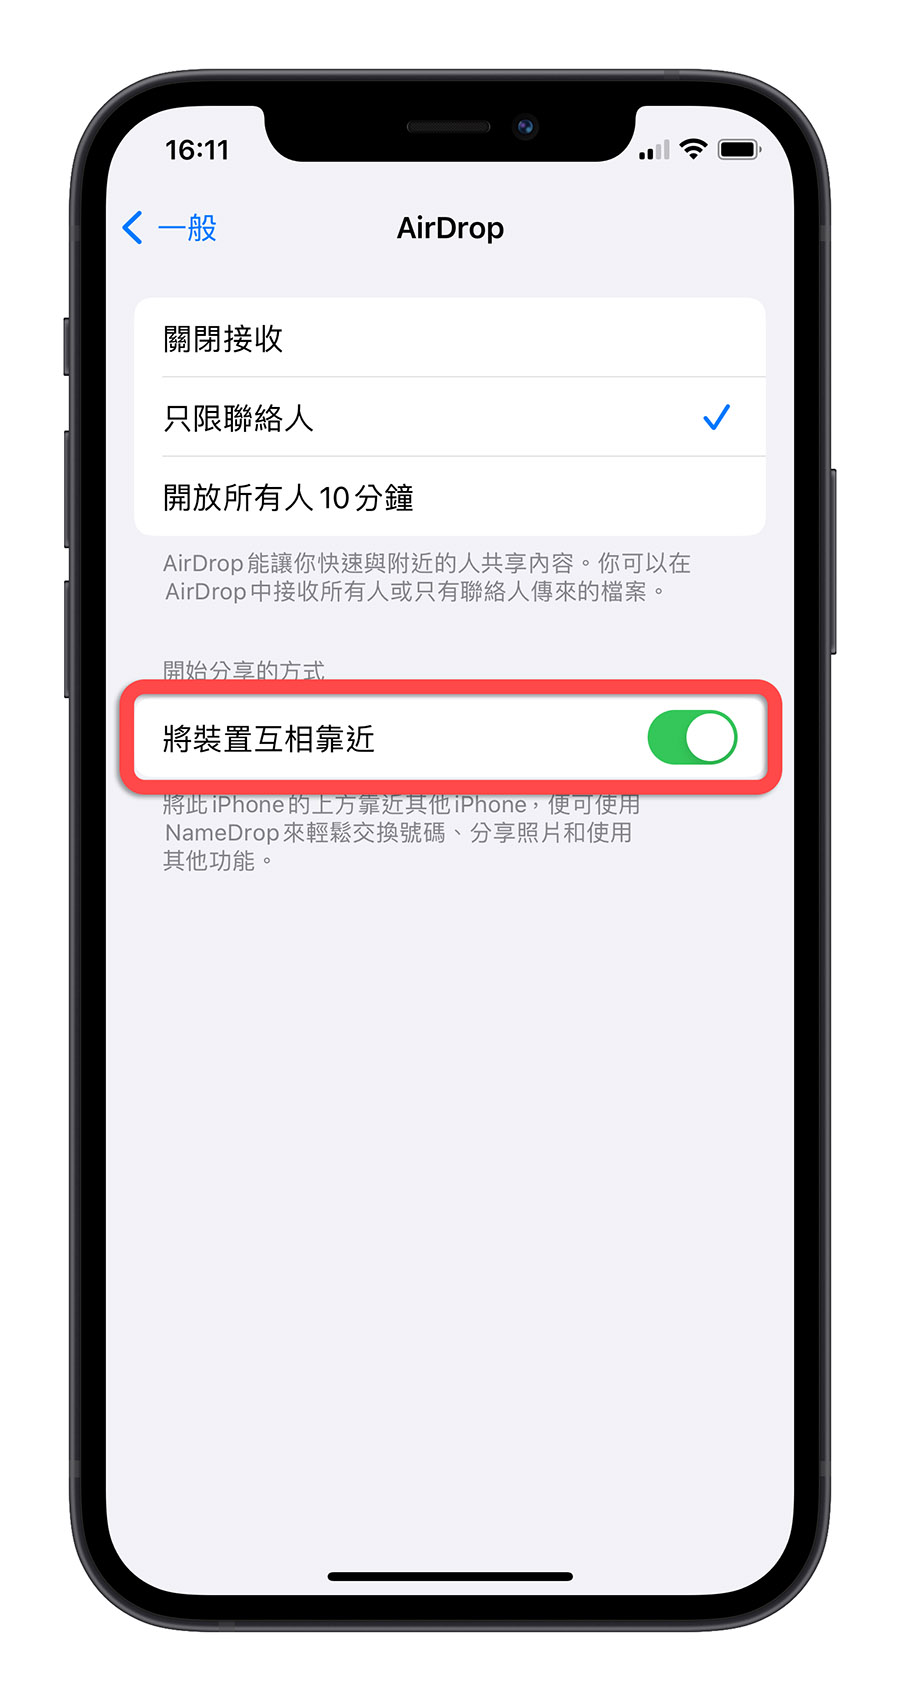 iOS 17 Beta 4 更新 功能